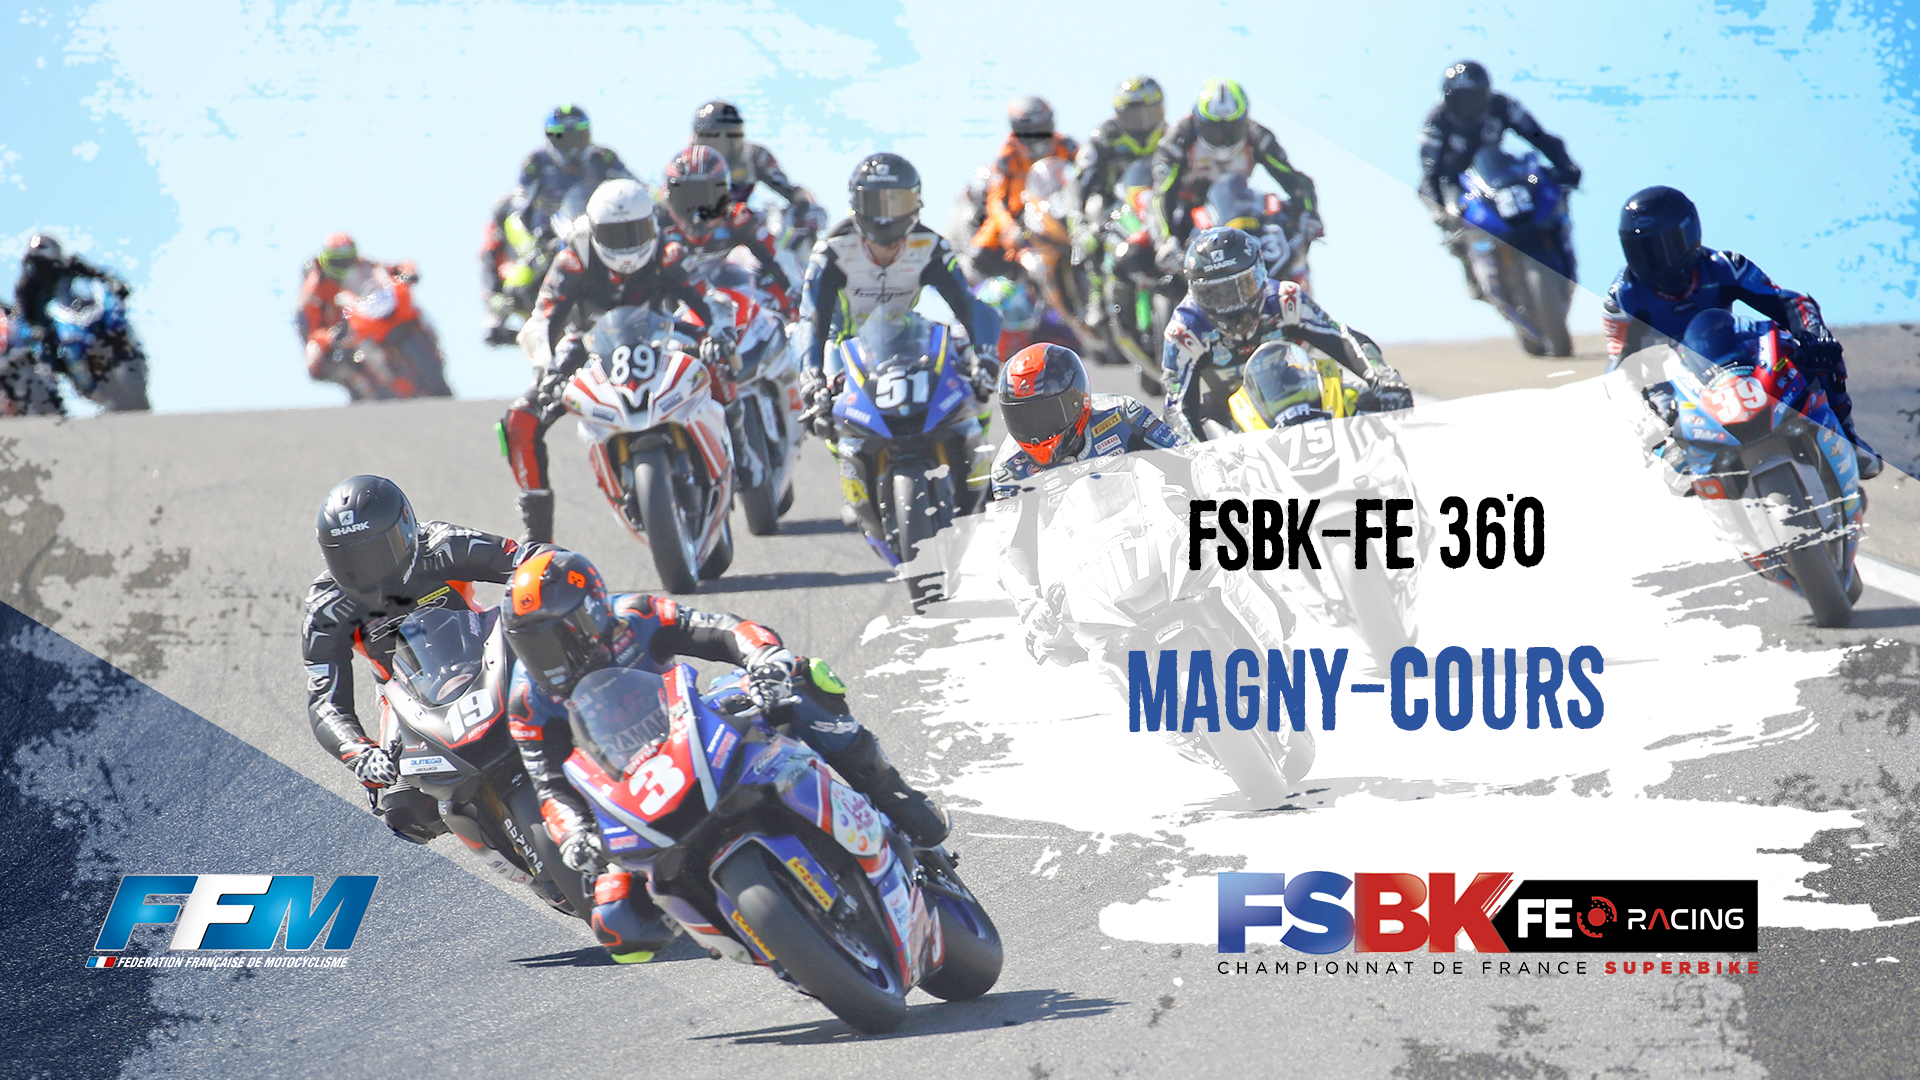 FSBK-FE 360 Magny Cours